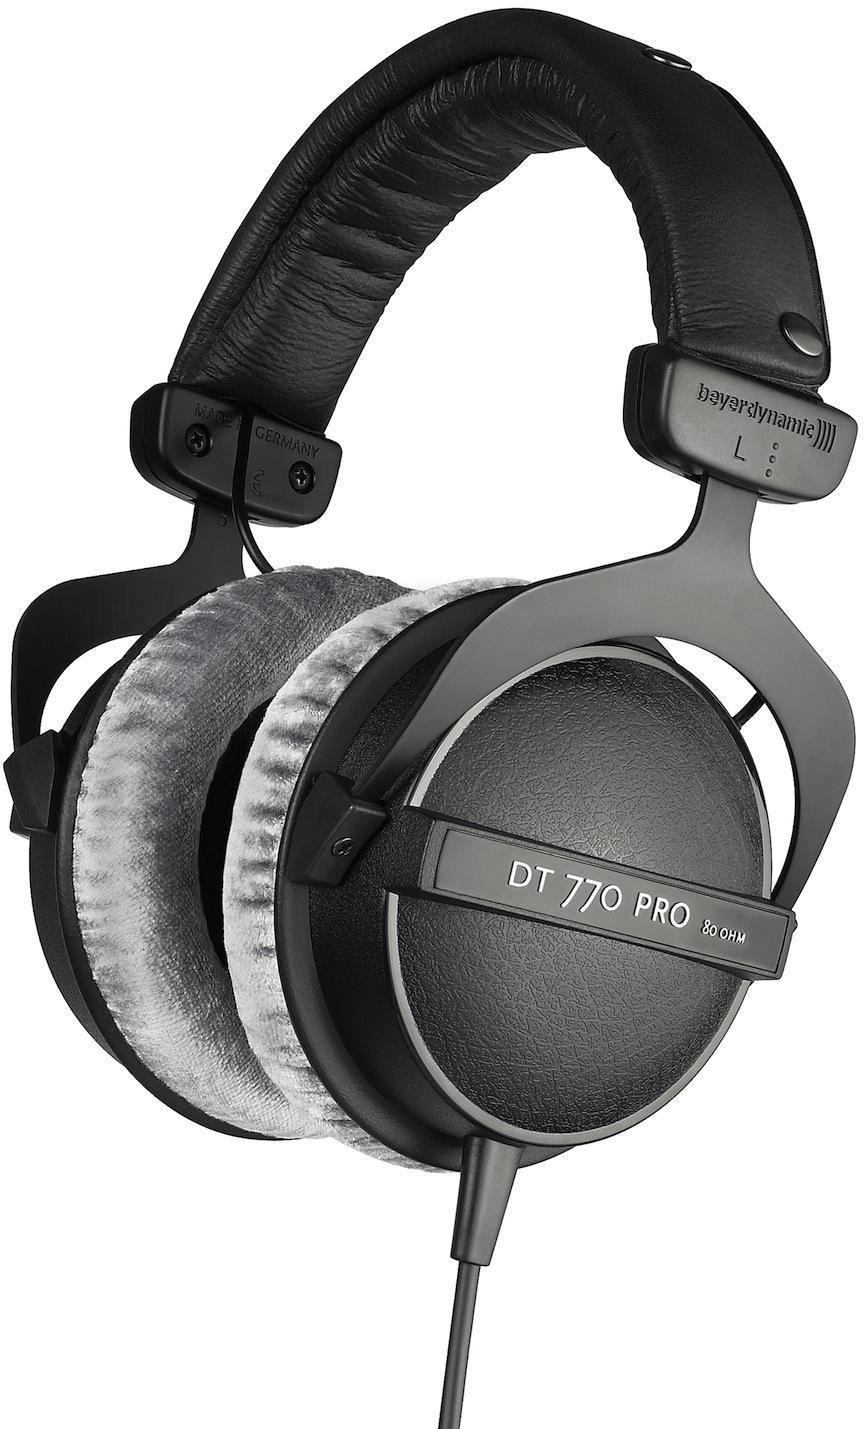 Closed headset Beyerdynamic DT 770 Pro (80 Ohms)